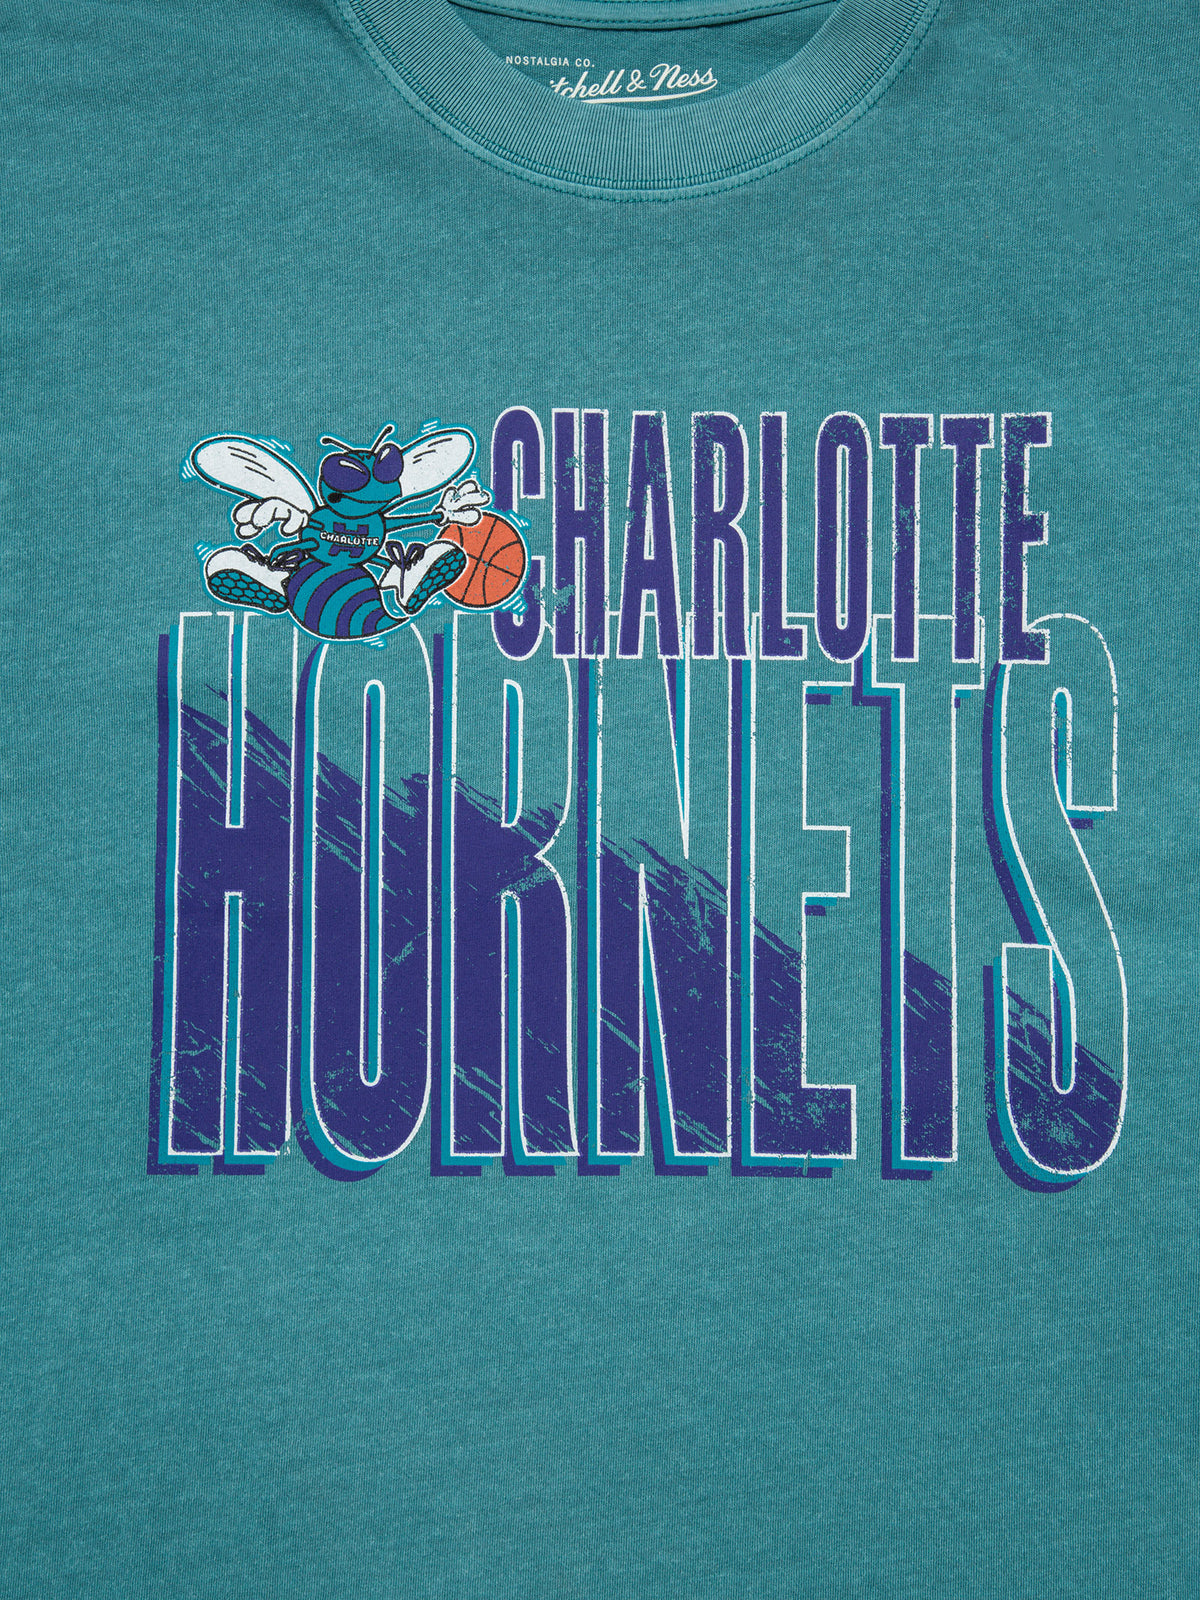 Vintage Scribble Charlotte Hornets T-Shirt in Blue